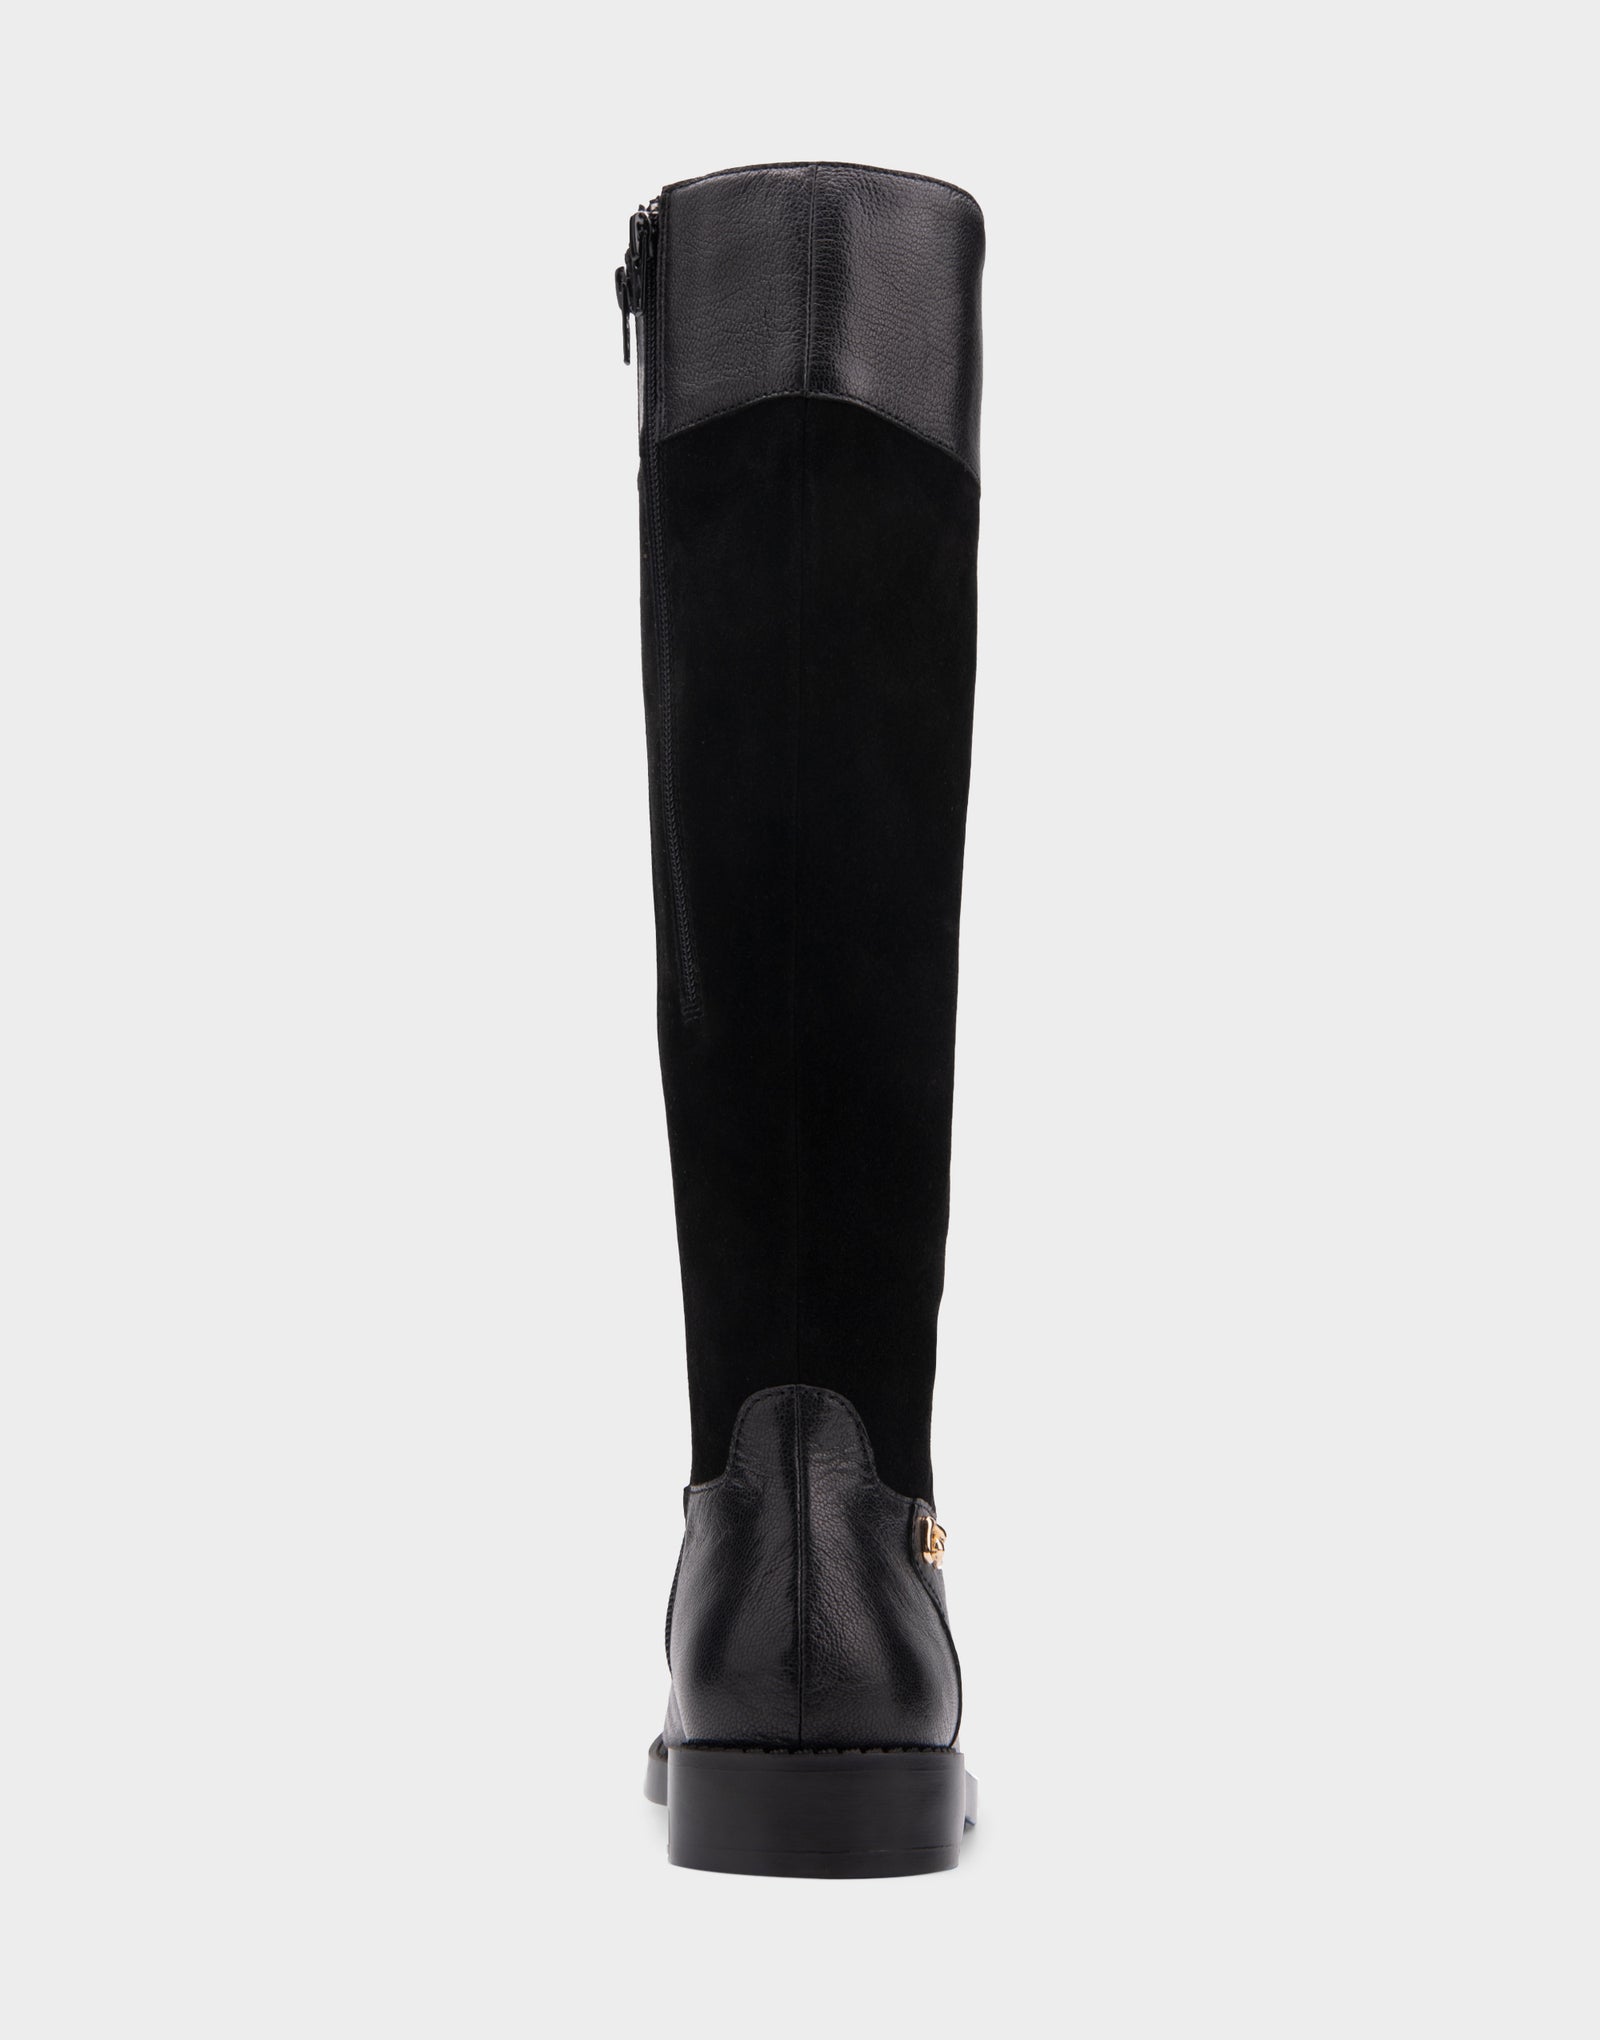 Women's Tall Shaft Boot in Black